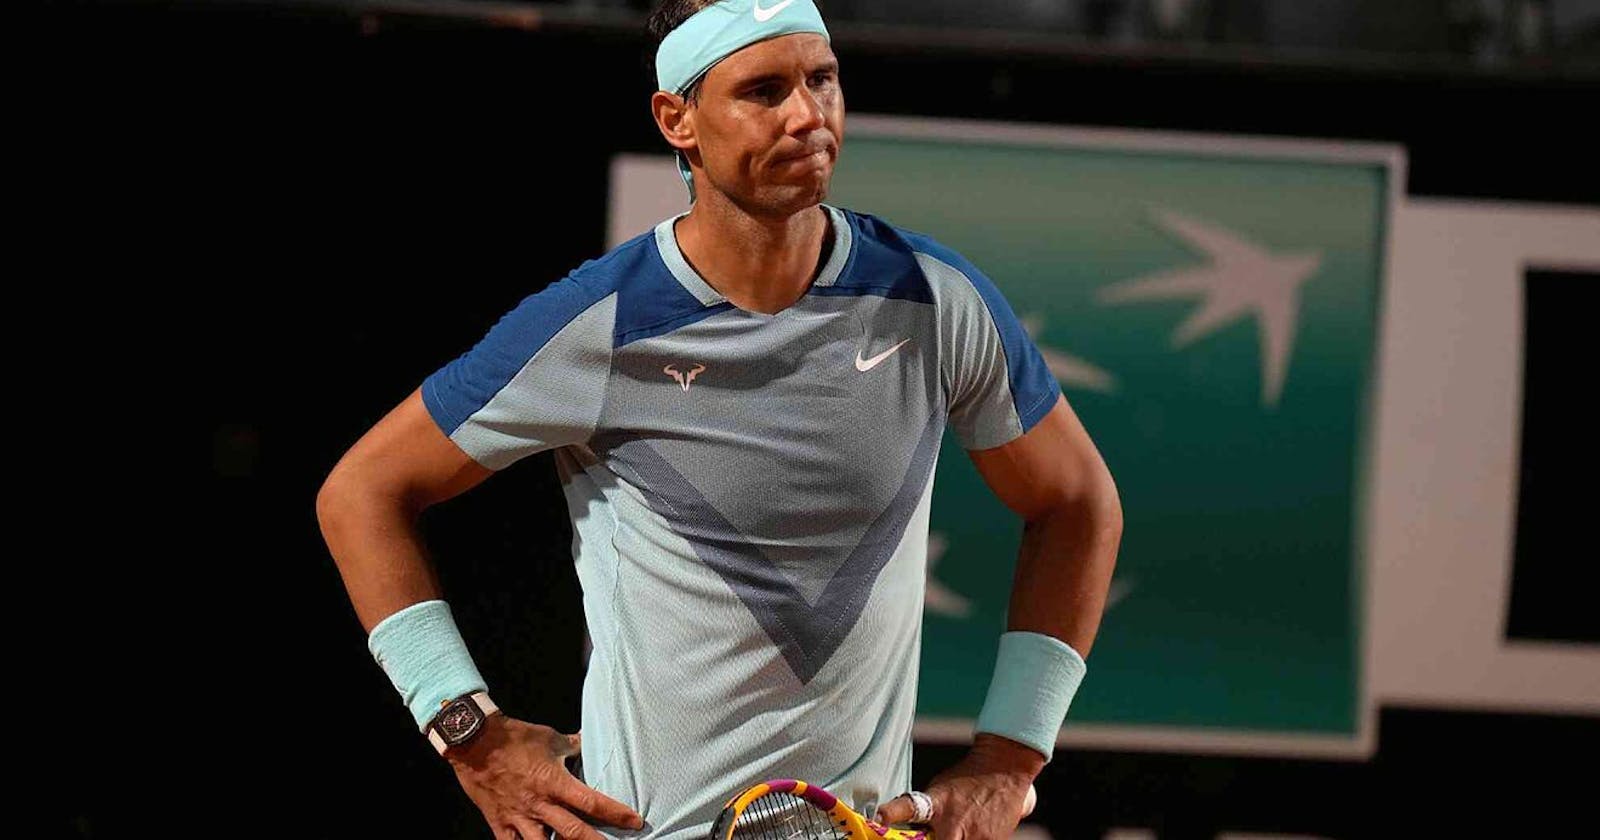 Rafael Nadal returns to Wimbledon after improving from injury